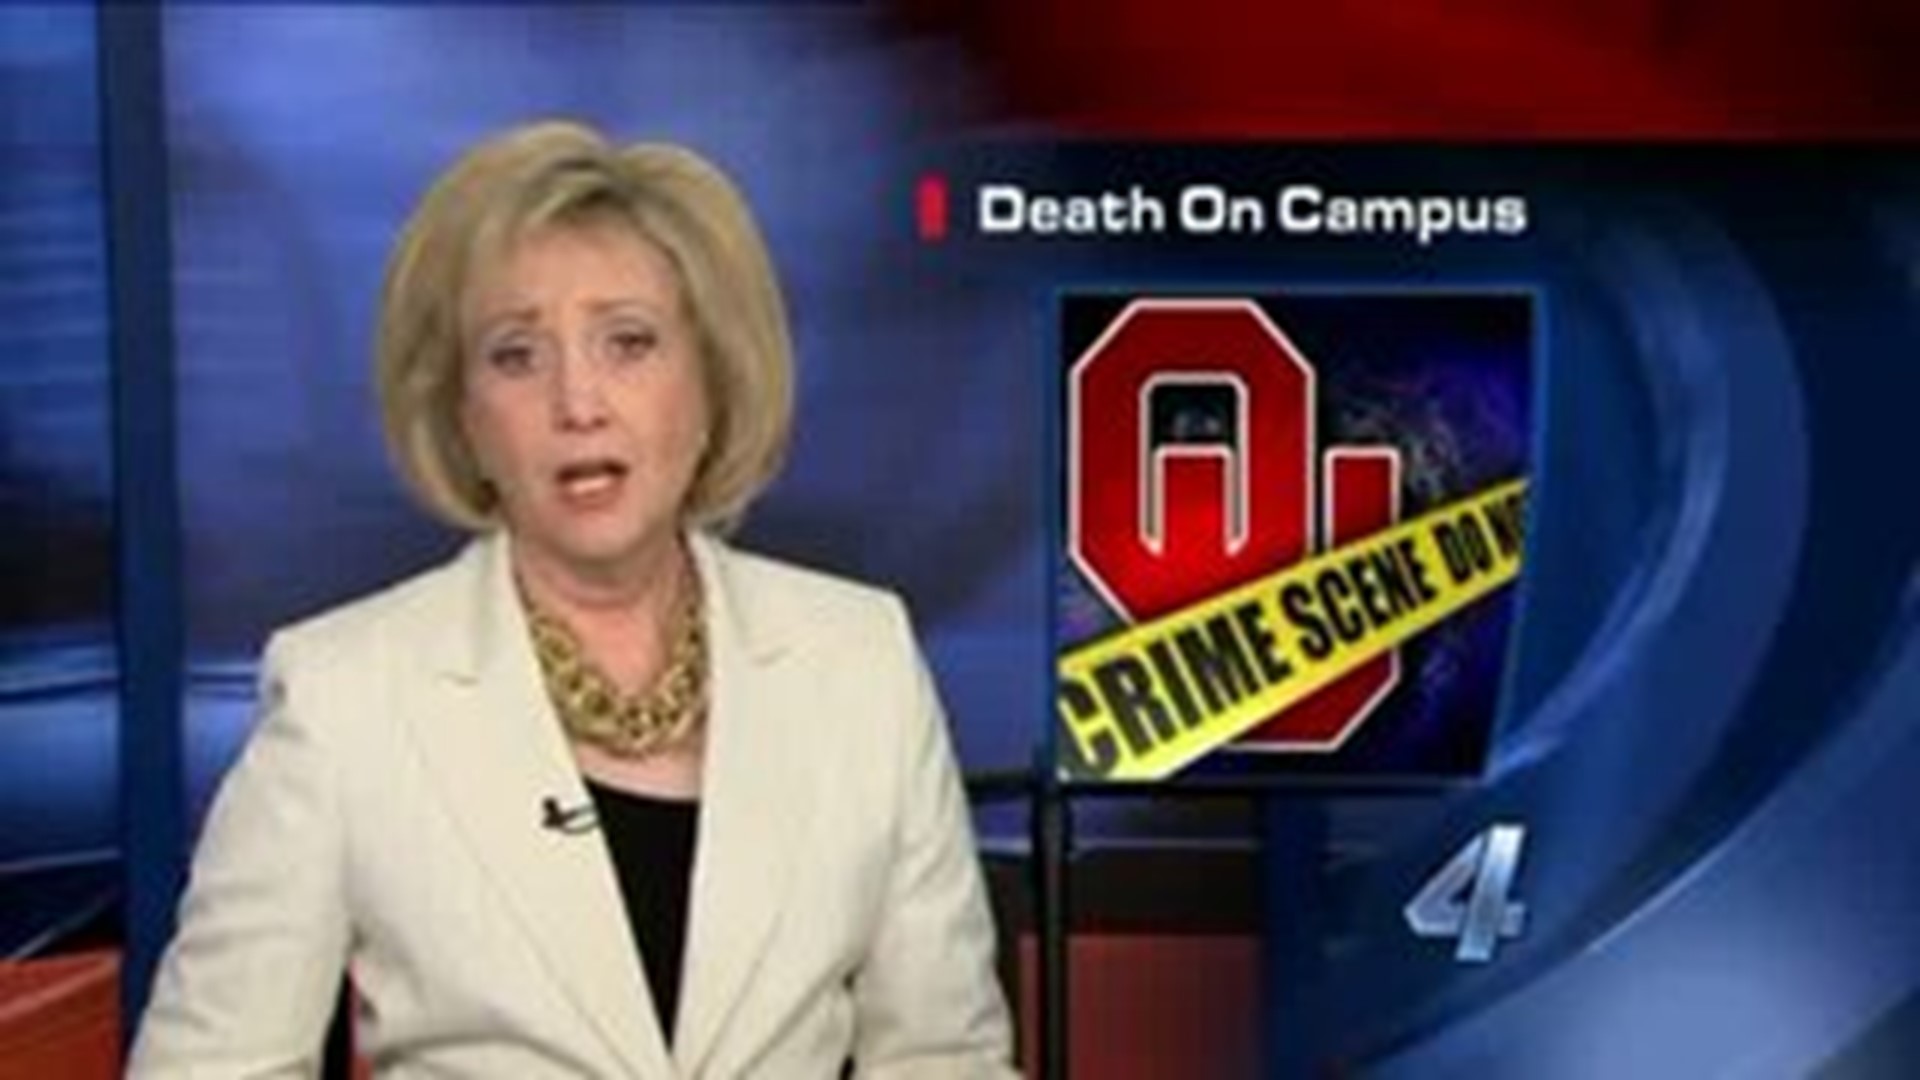 OU Student Found Dead